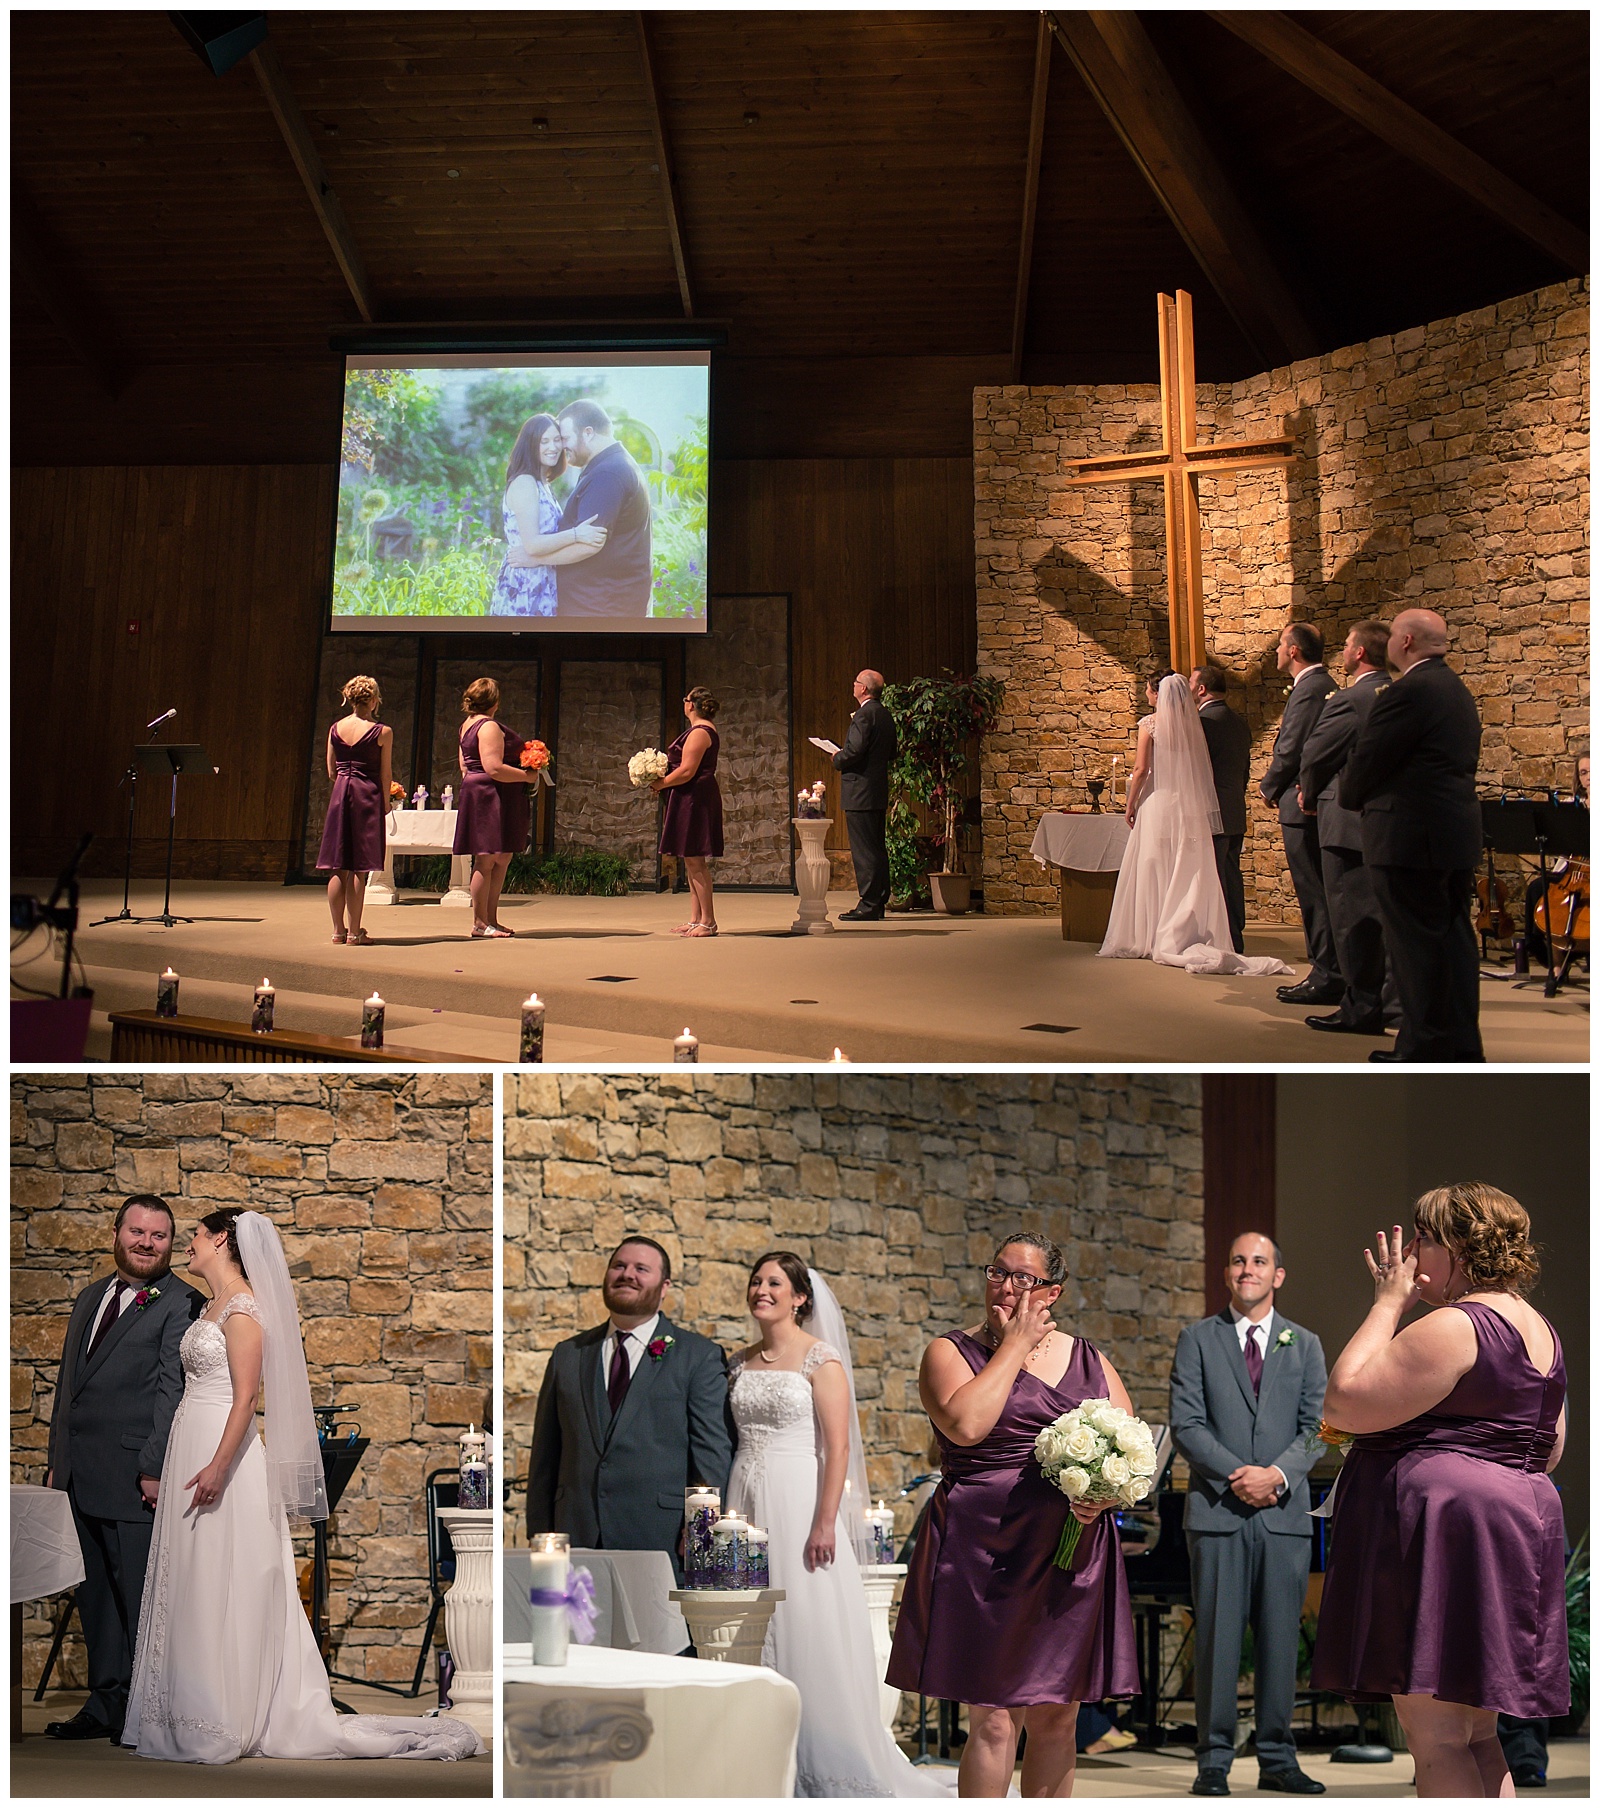 Wedding photography at Shawnee Church of the Nazarene in Shawnee, Kansas.